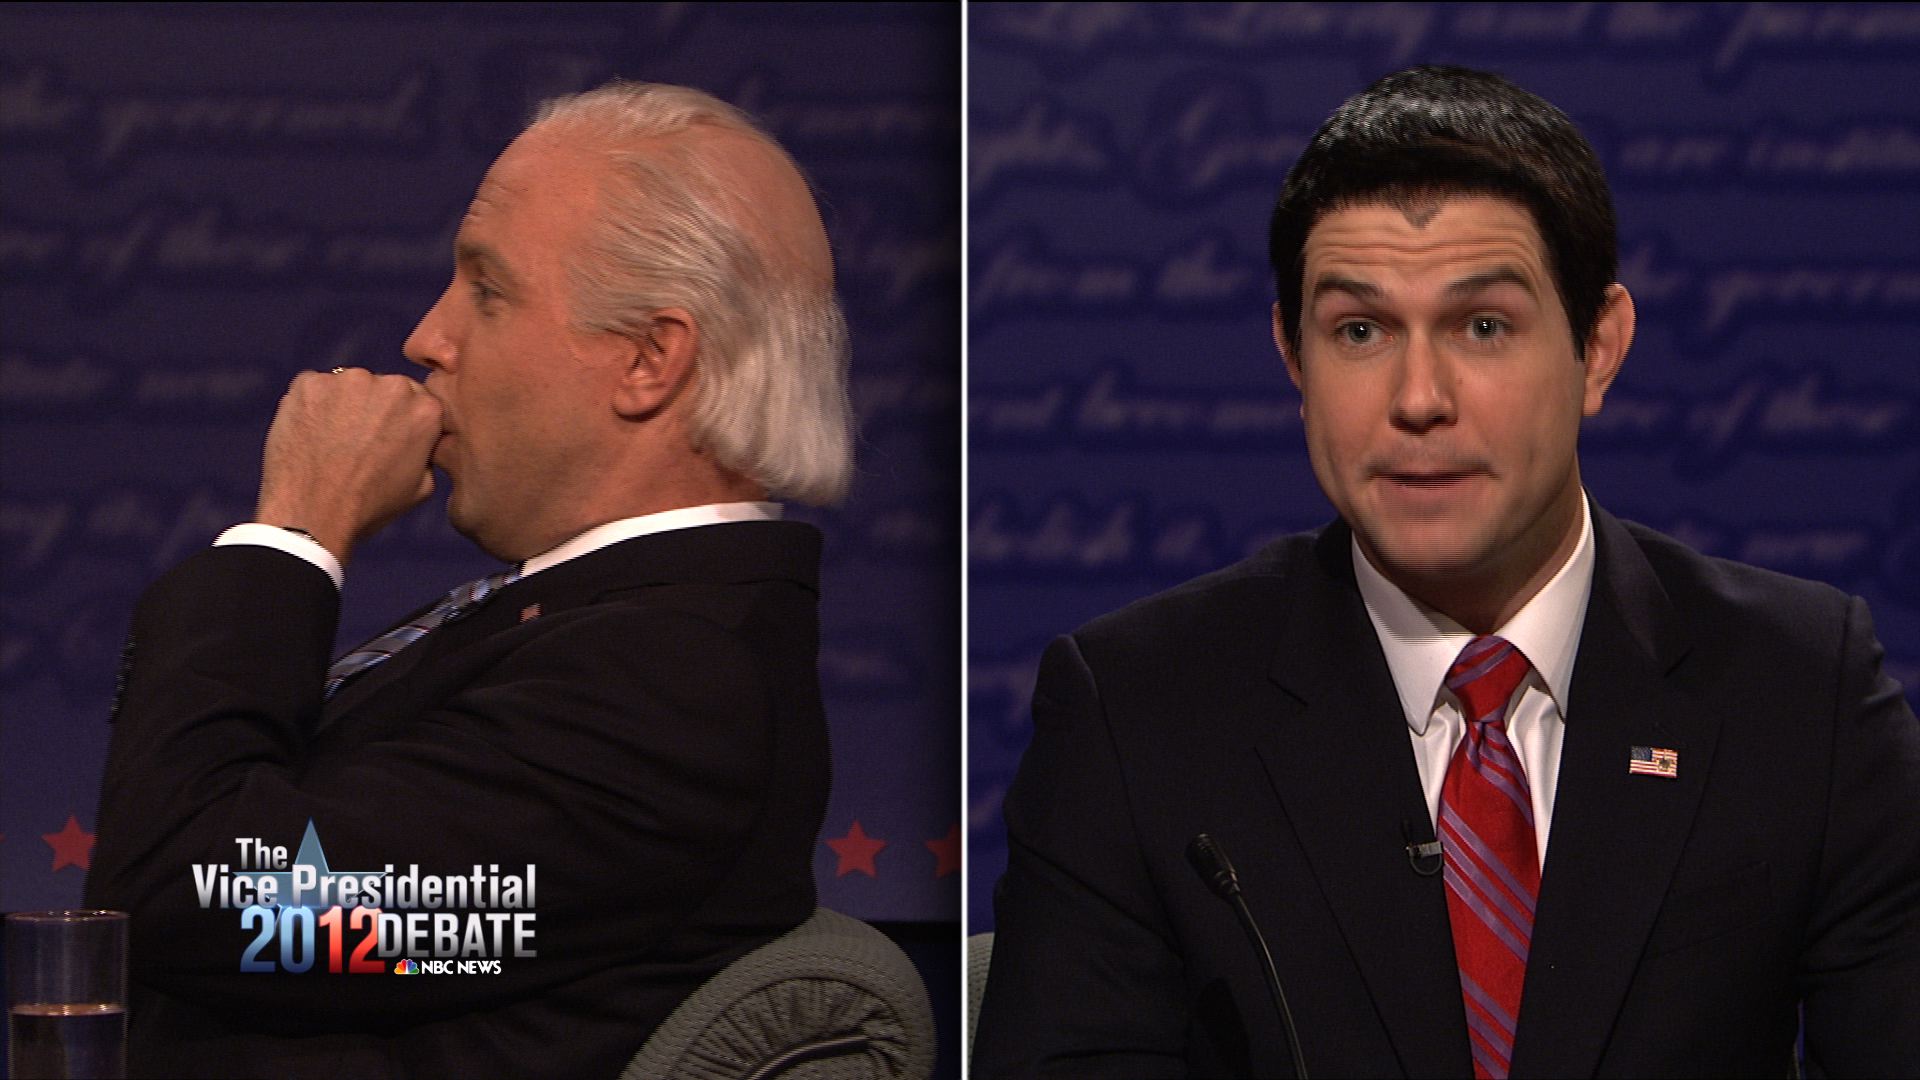 Watch Saturday Night Live Highlight: Vice Presidential Debate Cold Open - NBC.com1920 x 1080